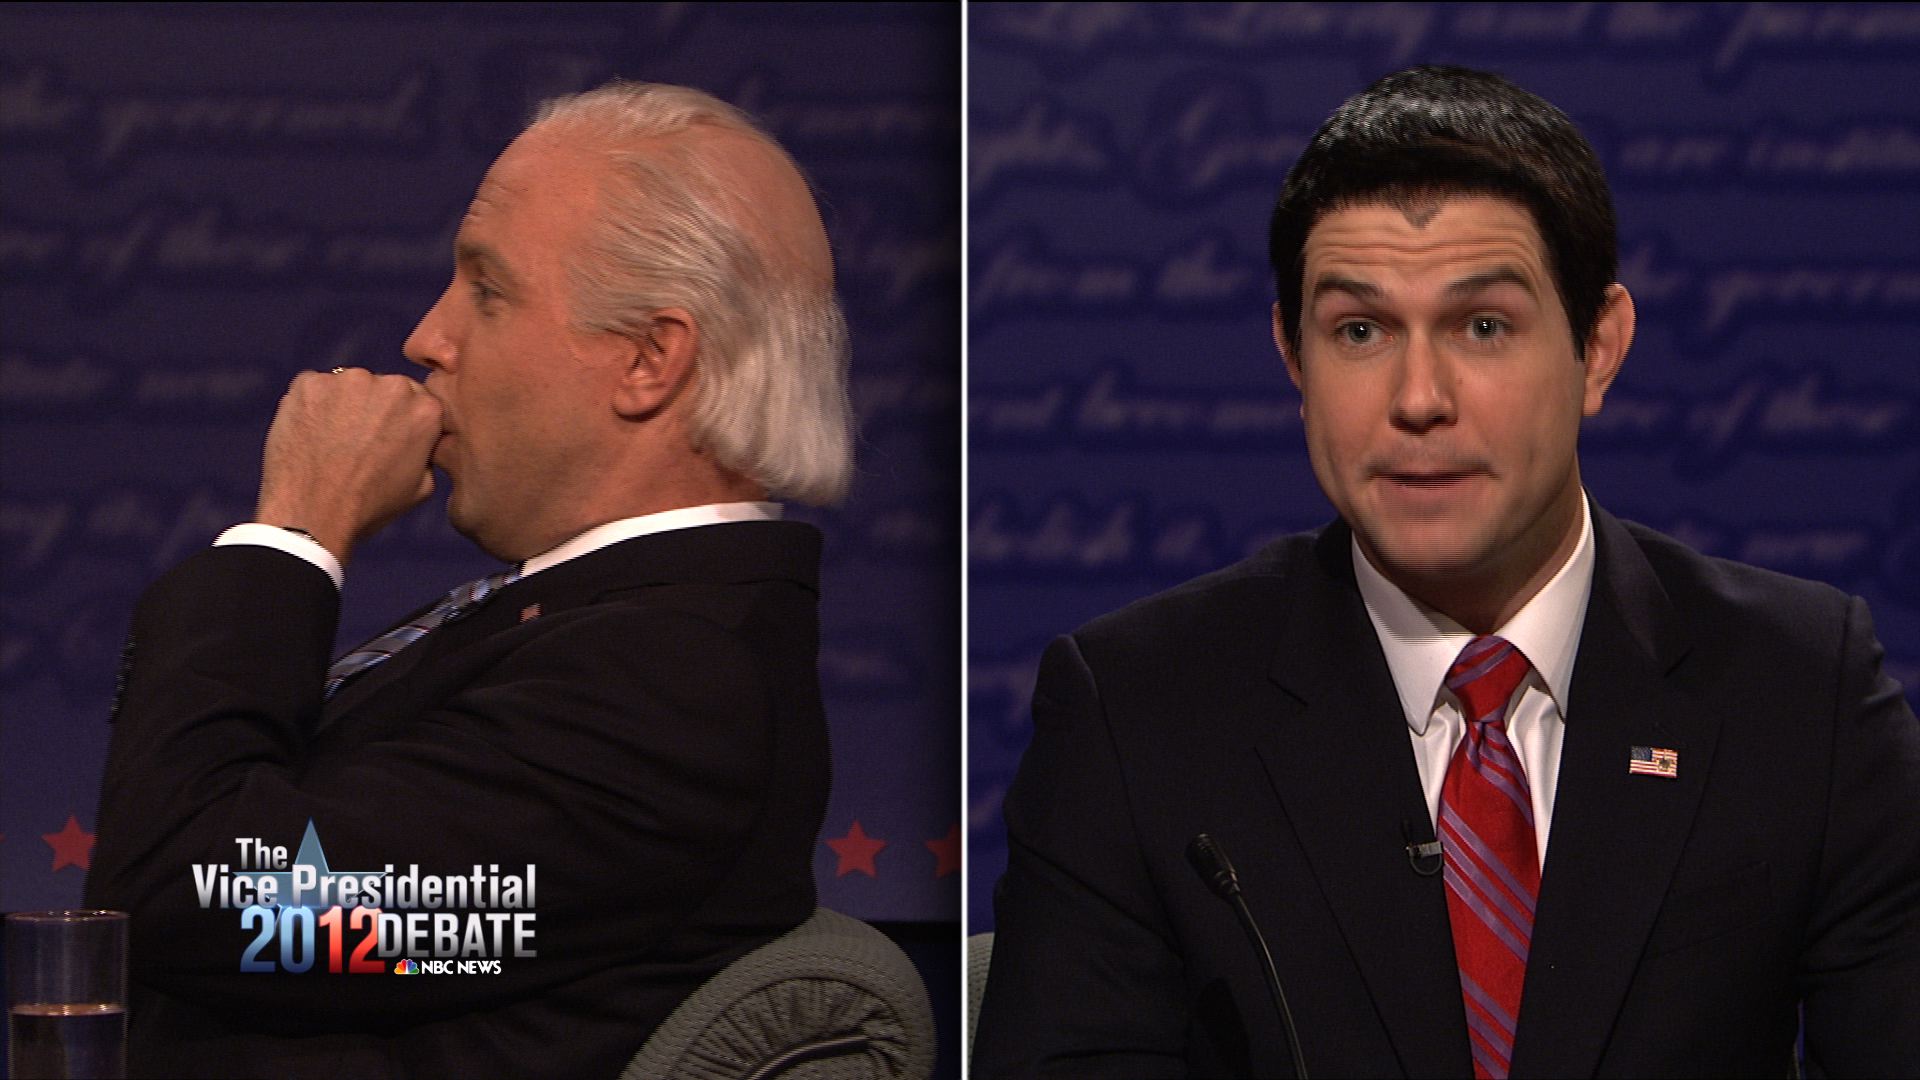 Watch Saturday Night Live Highlight: Vice Presidential Debate Cold Open - NBC.com1920 x 1080